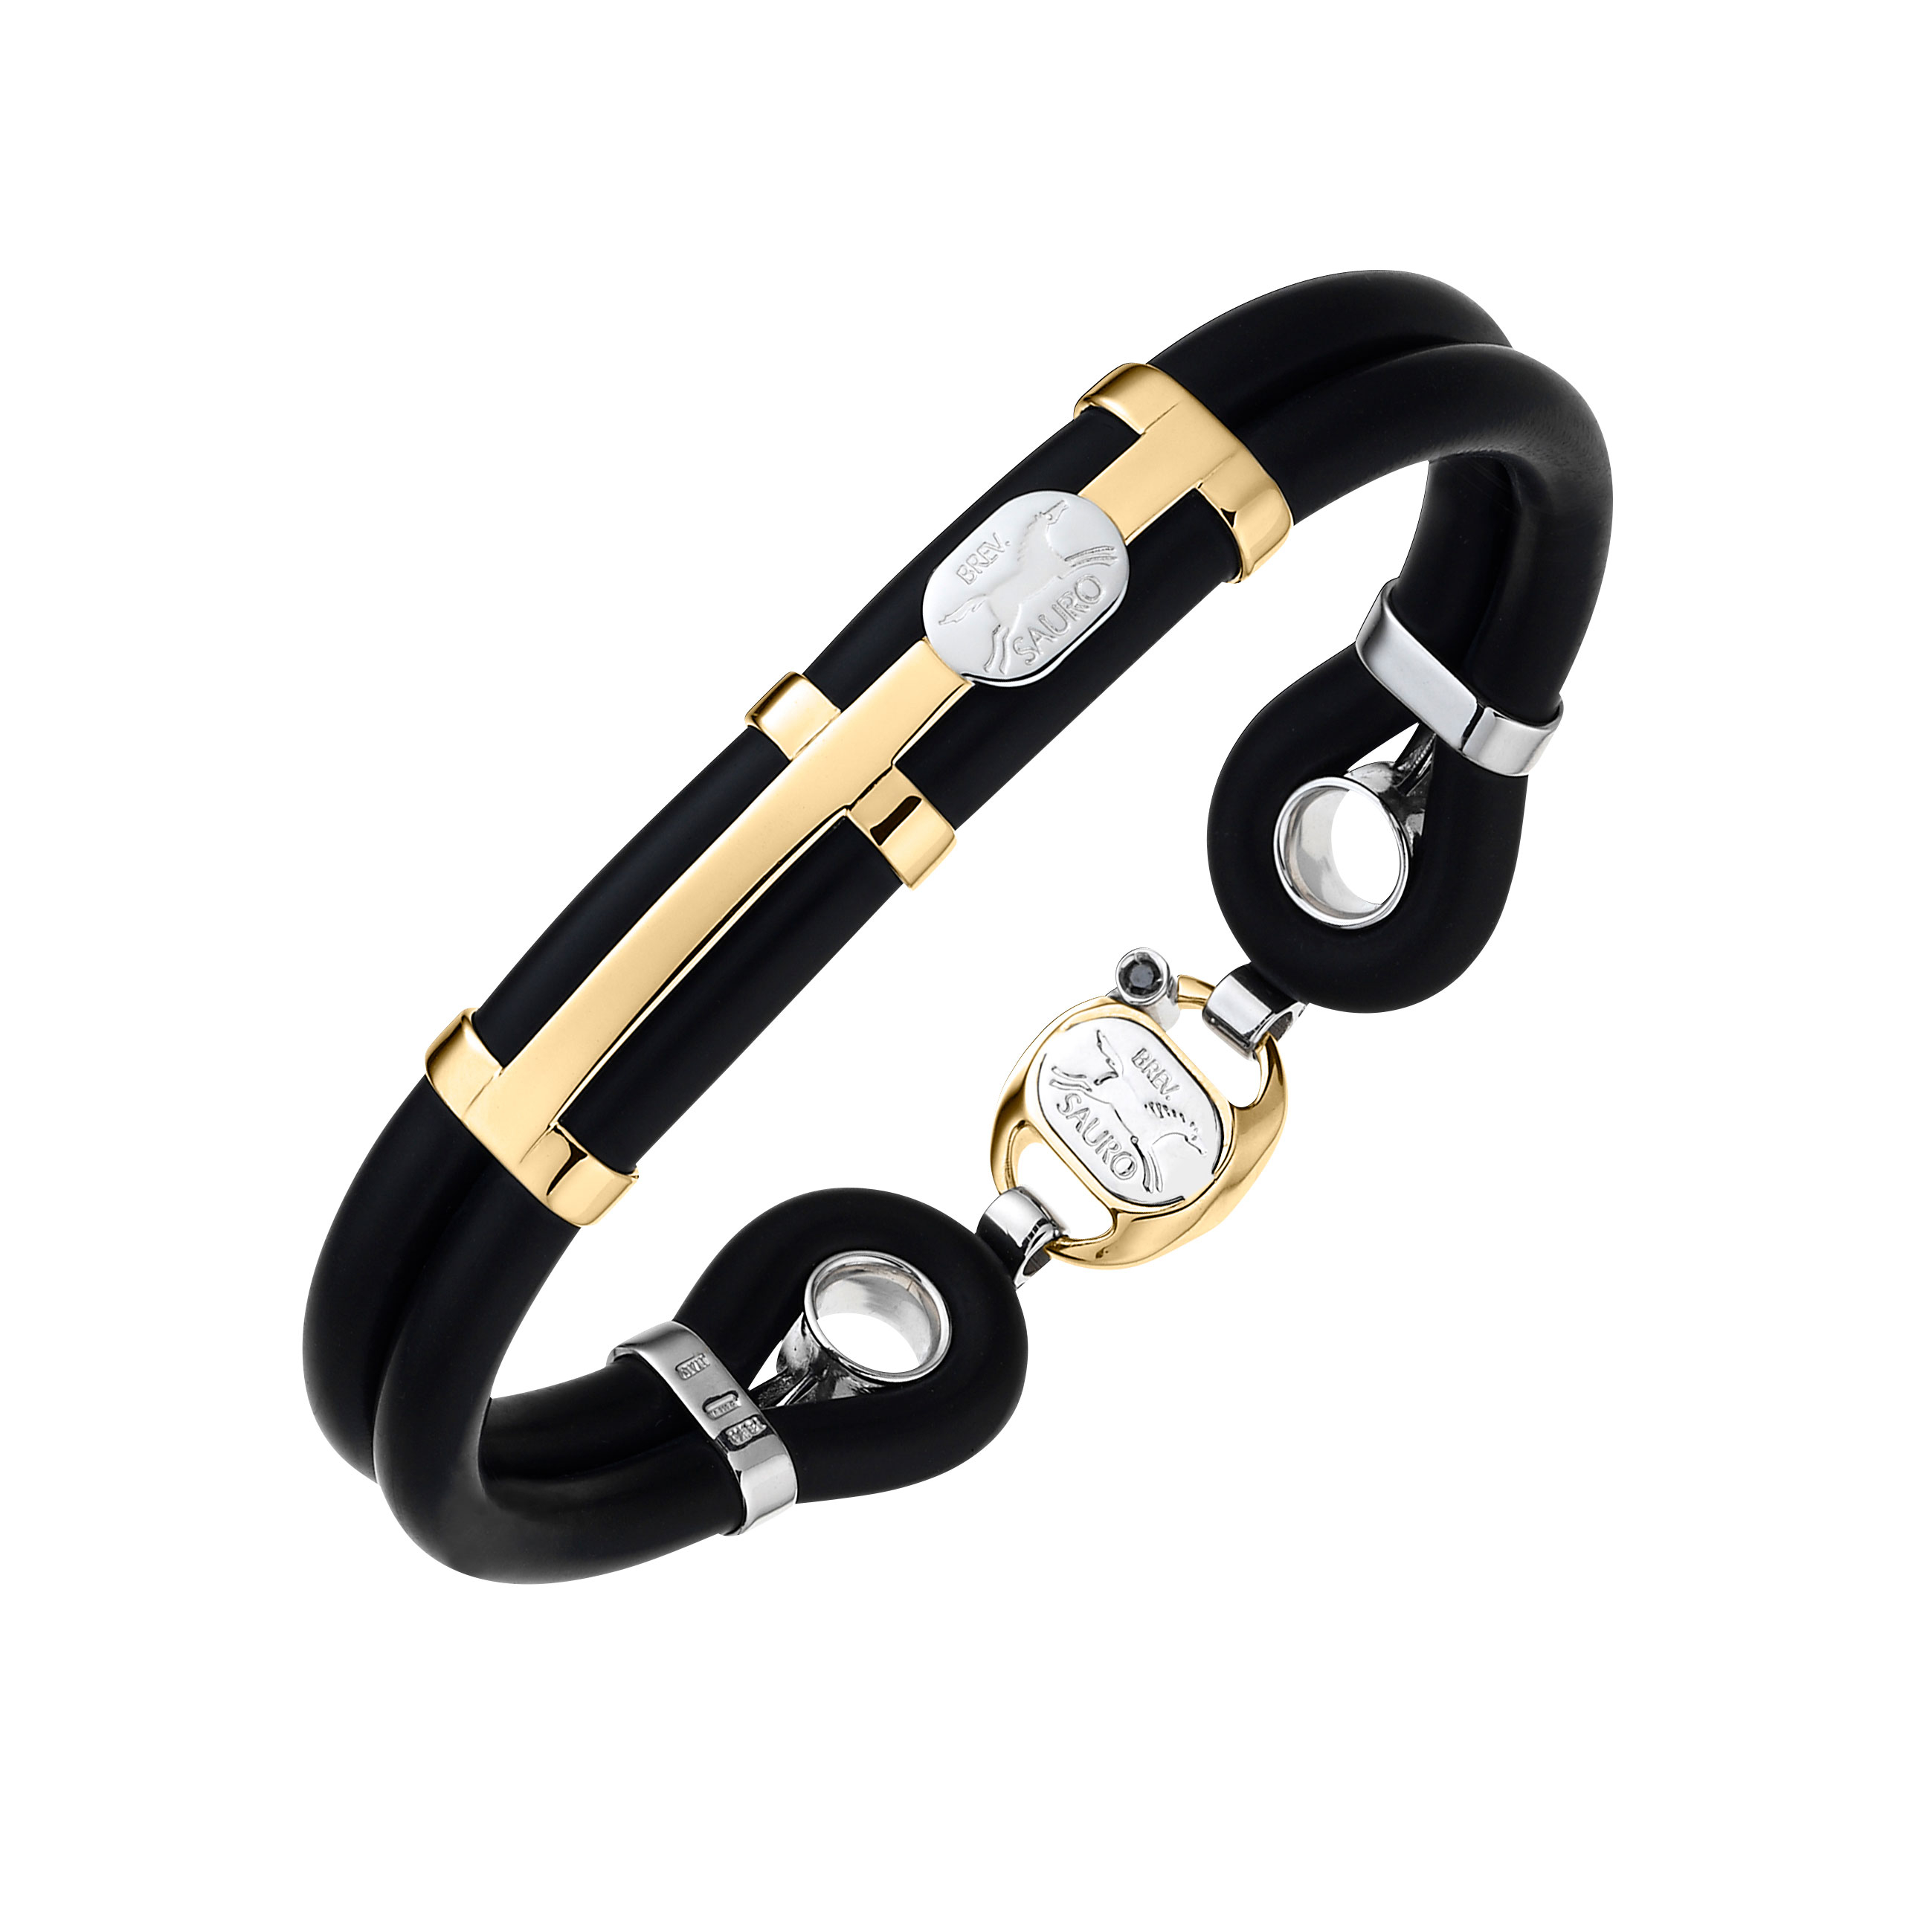 Very Trending Fancy Black Golden Rubber Bracelet For Men - Style A419 at Rs  600.00 | मेंस ब्रेसलेट - Soni Fashion, Rajkot | ID: 25929255291